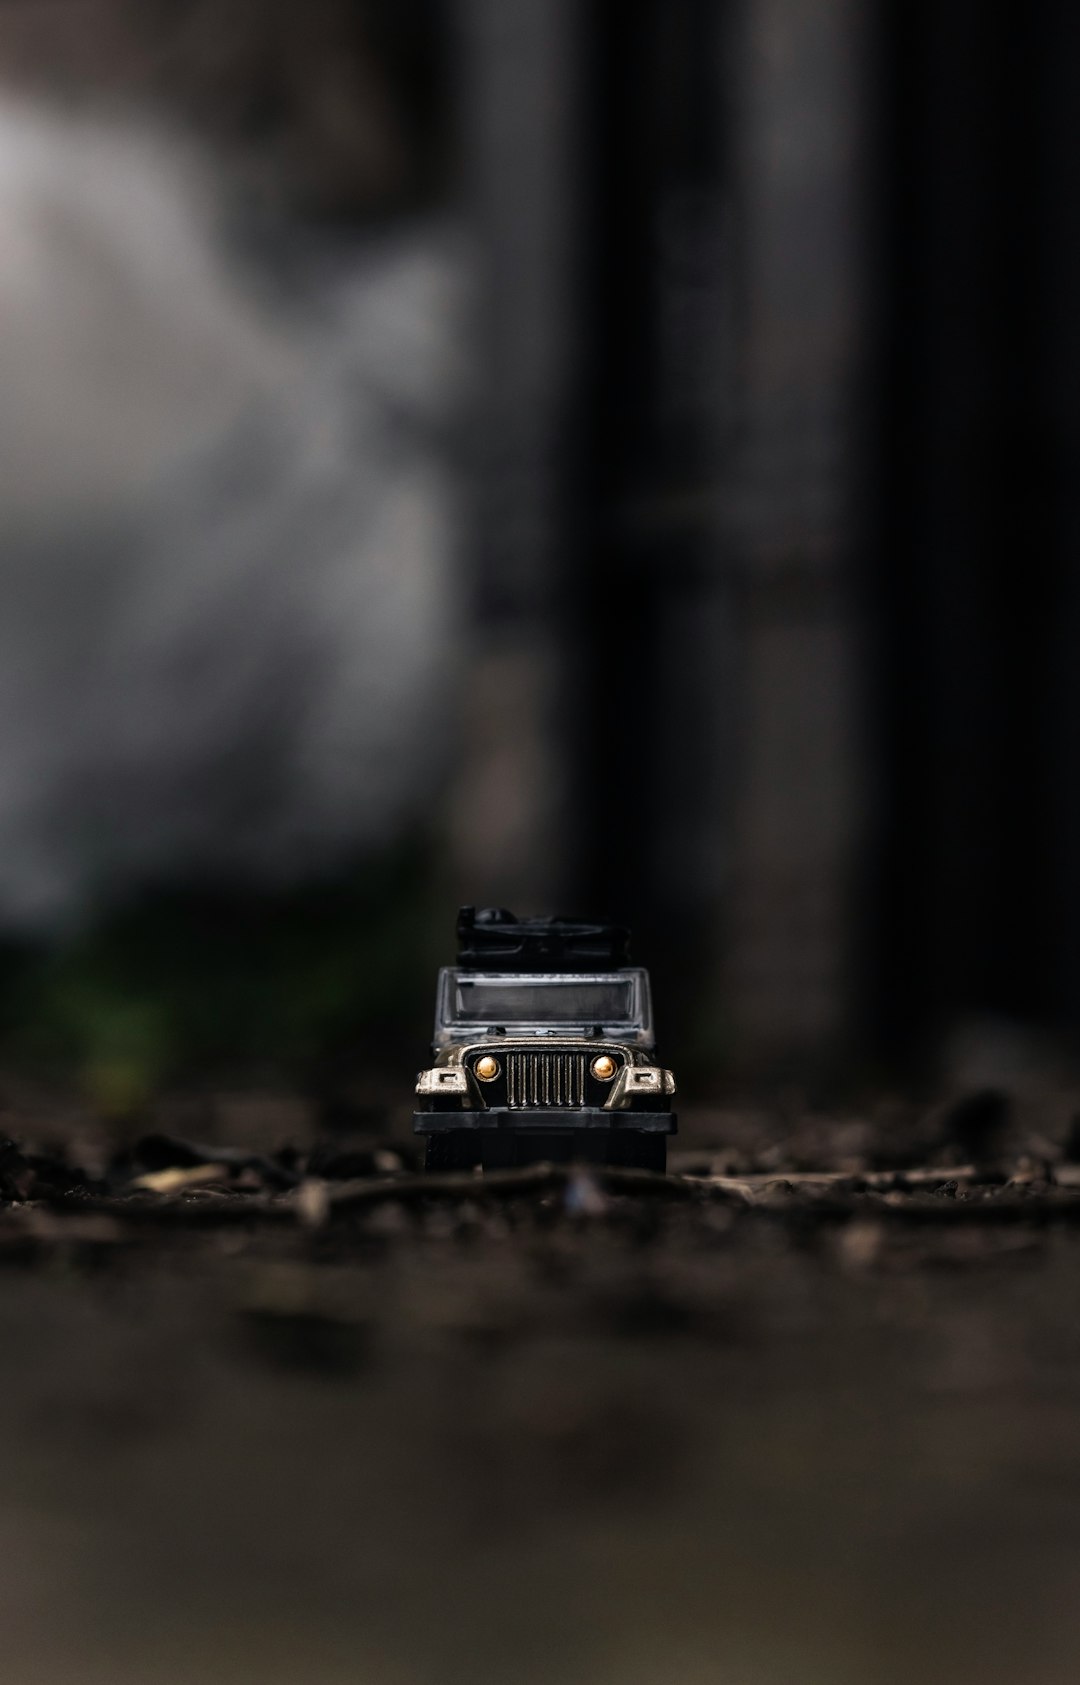 tilt shift lens photography of black Jeep toy